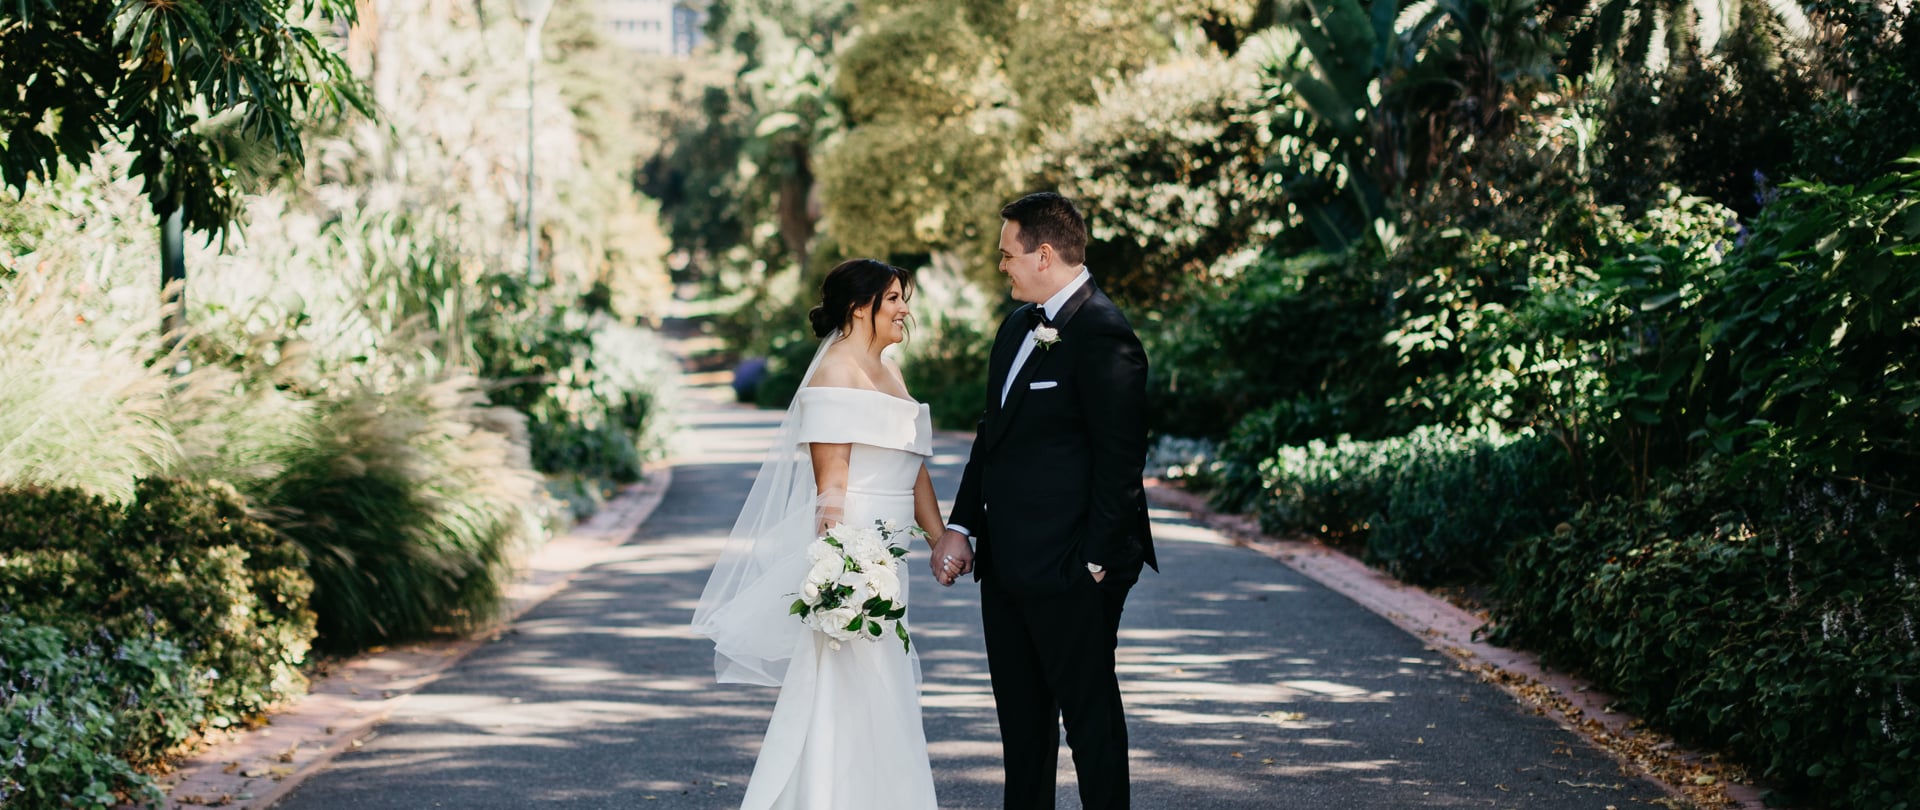 Rachel & Anthony Wedding Video Filmed at Melbourne, Victoria